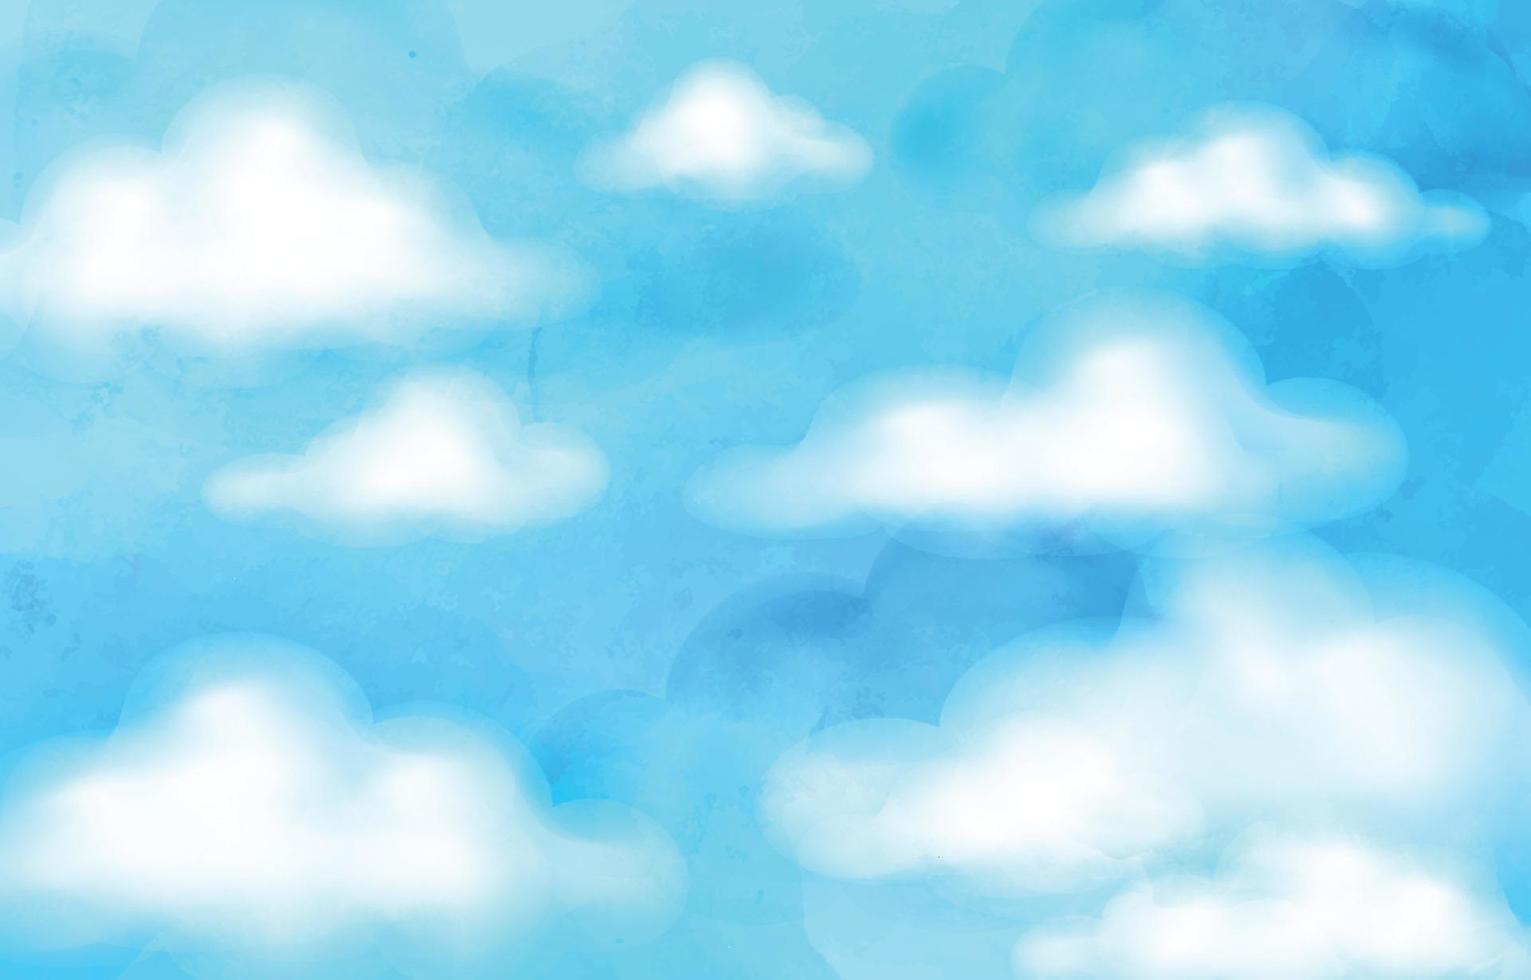 aquarell blauer himmel hintergrund vektor